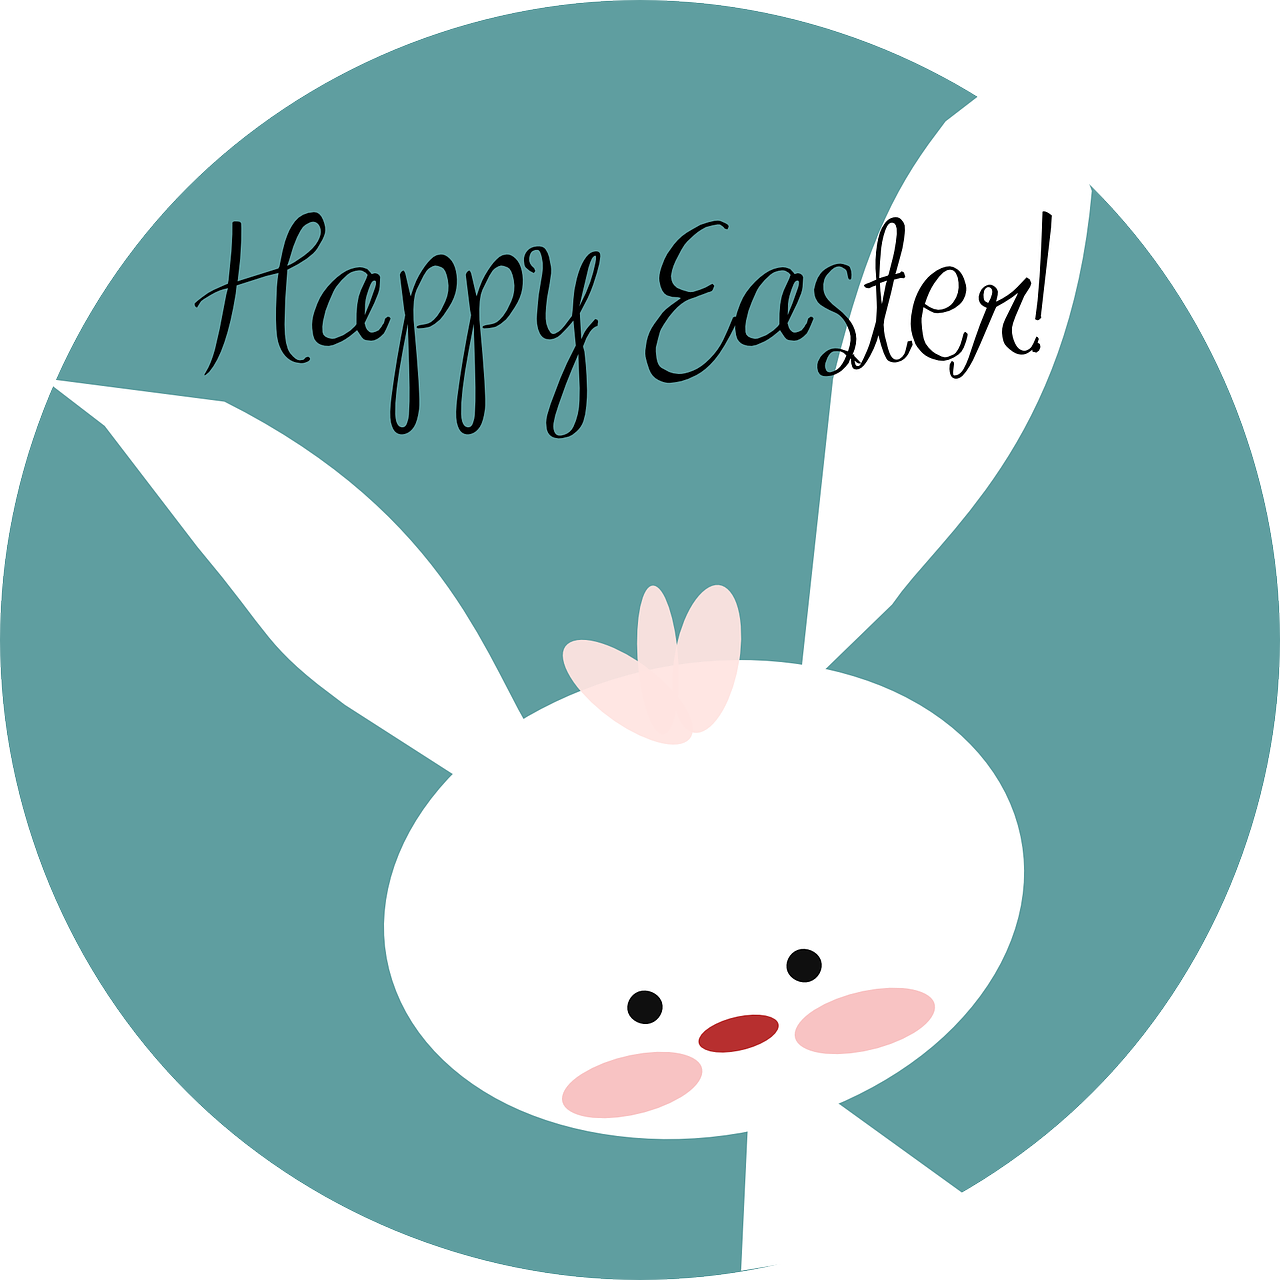 Happy Easter! Enjoy the long weekend! - EC Vancouver Blog